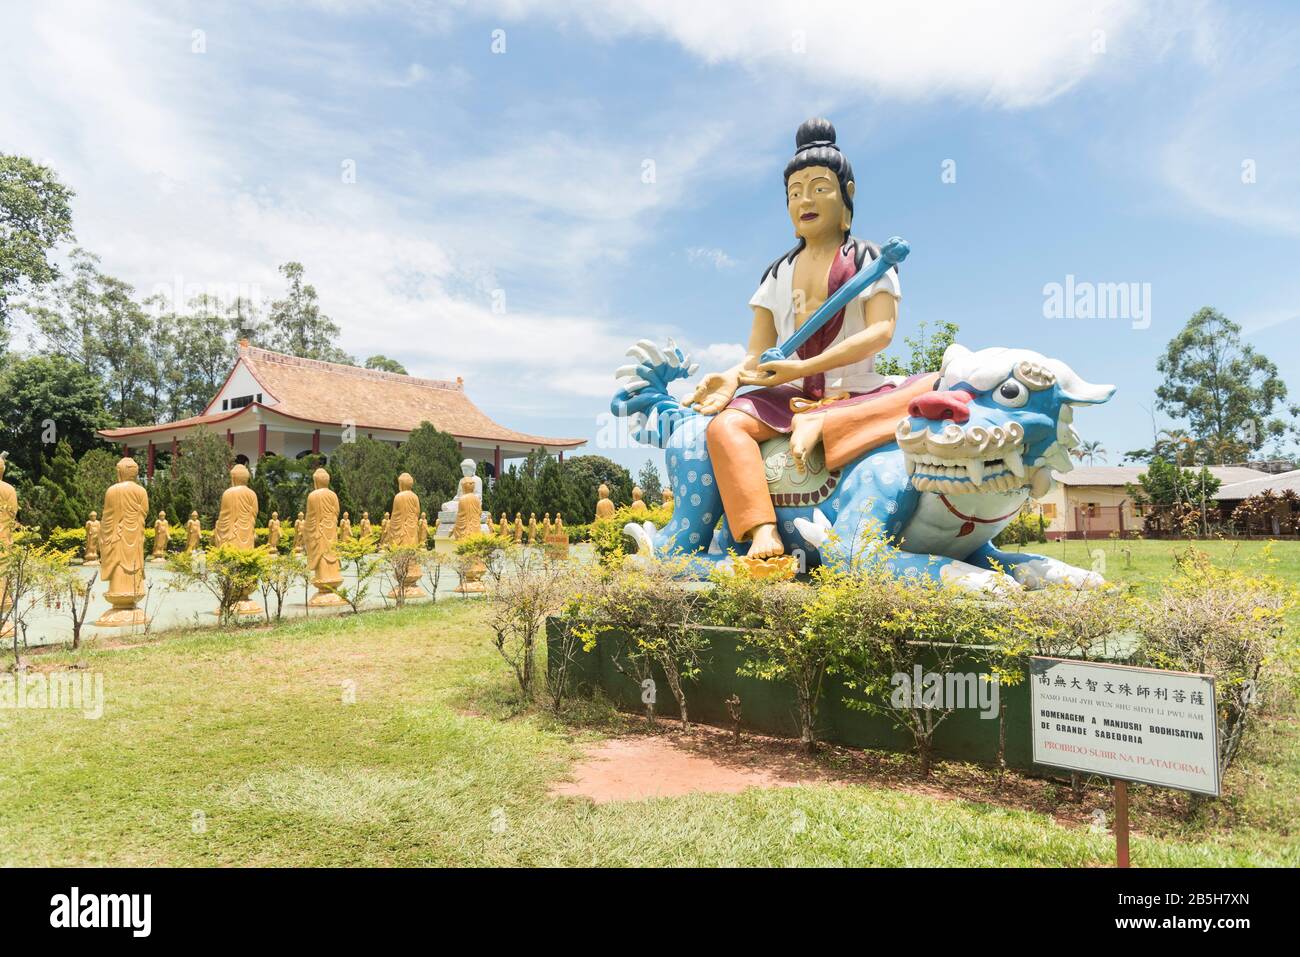 Foz do Iguacu, Parana / Brasile; 17 dicembre 2017: Tempio buddista Chen Tien, statua colorata di Bodhisattva Manjushri, seduta su un leone blu. Foto Stock